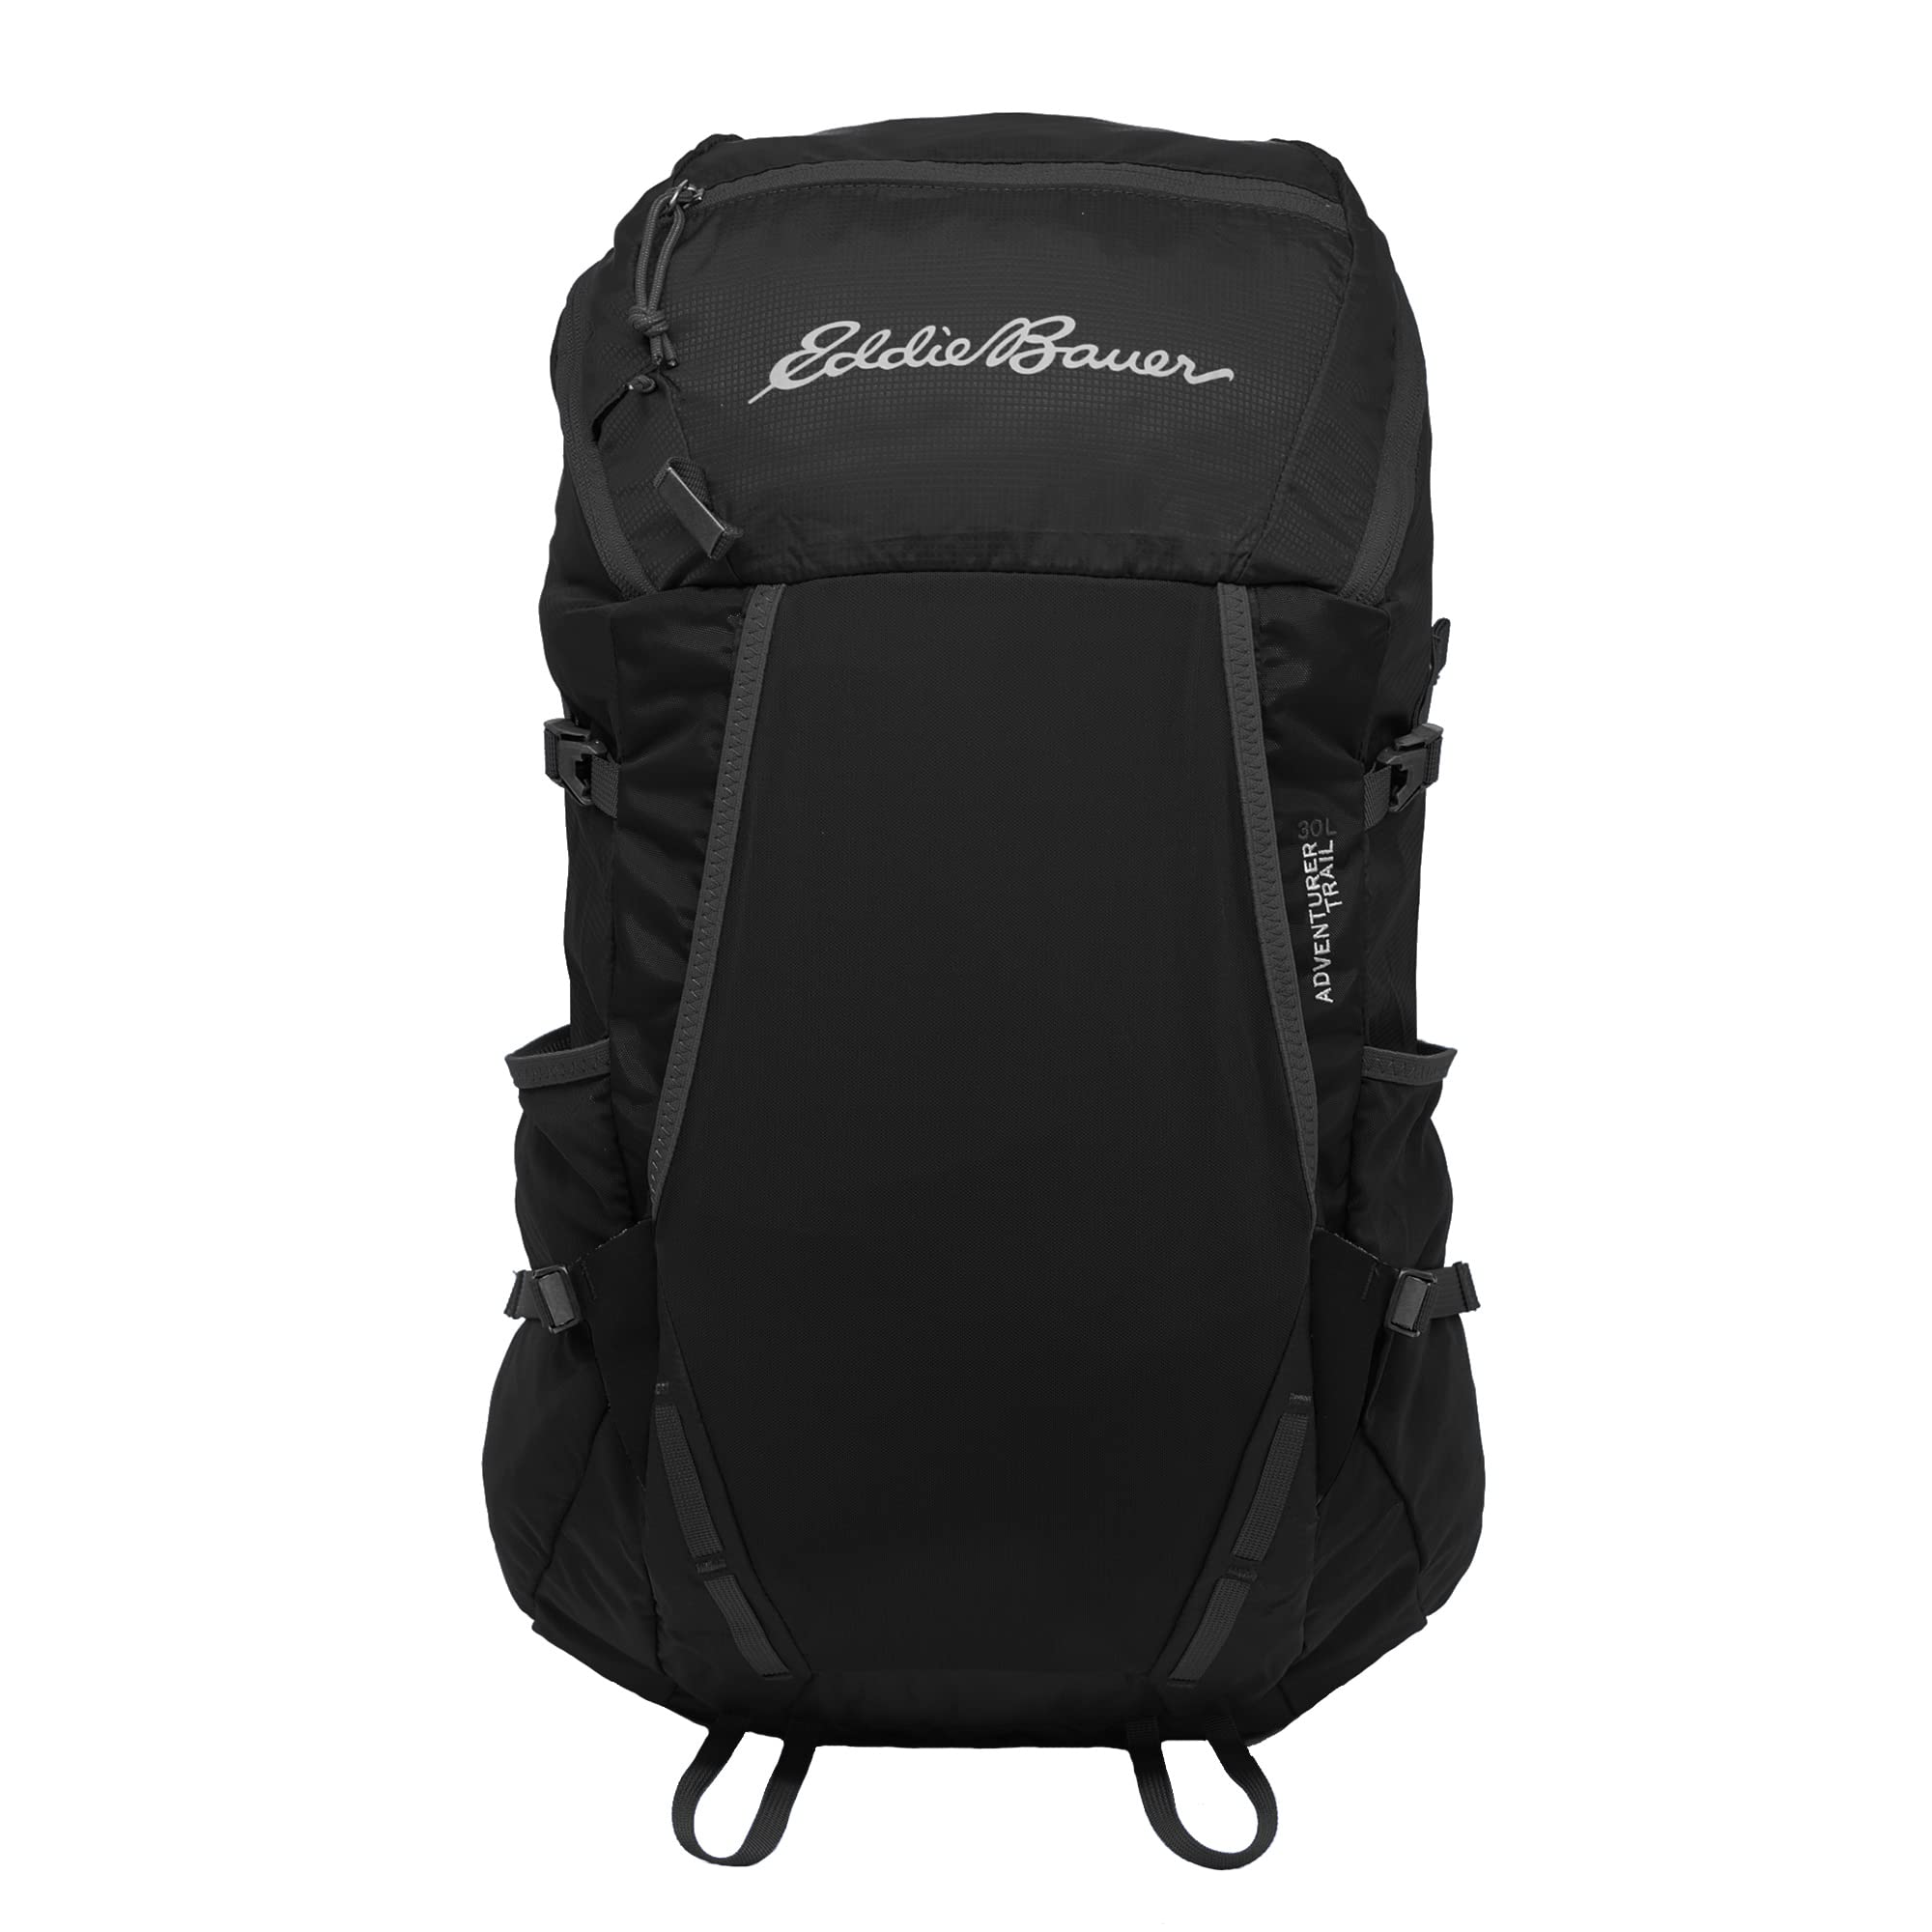 Eddie Bauer Adventurer Trail 30L Backpack w/Hydration Sleeve, Black